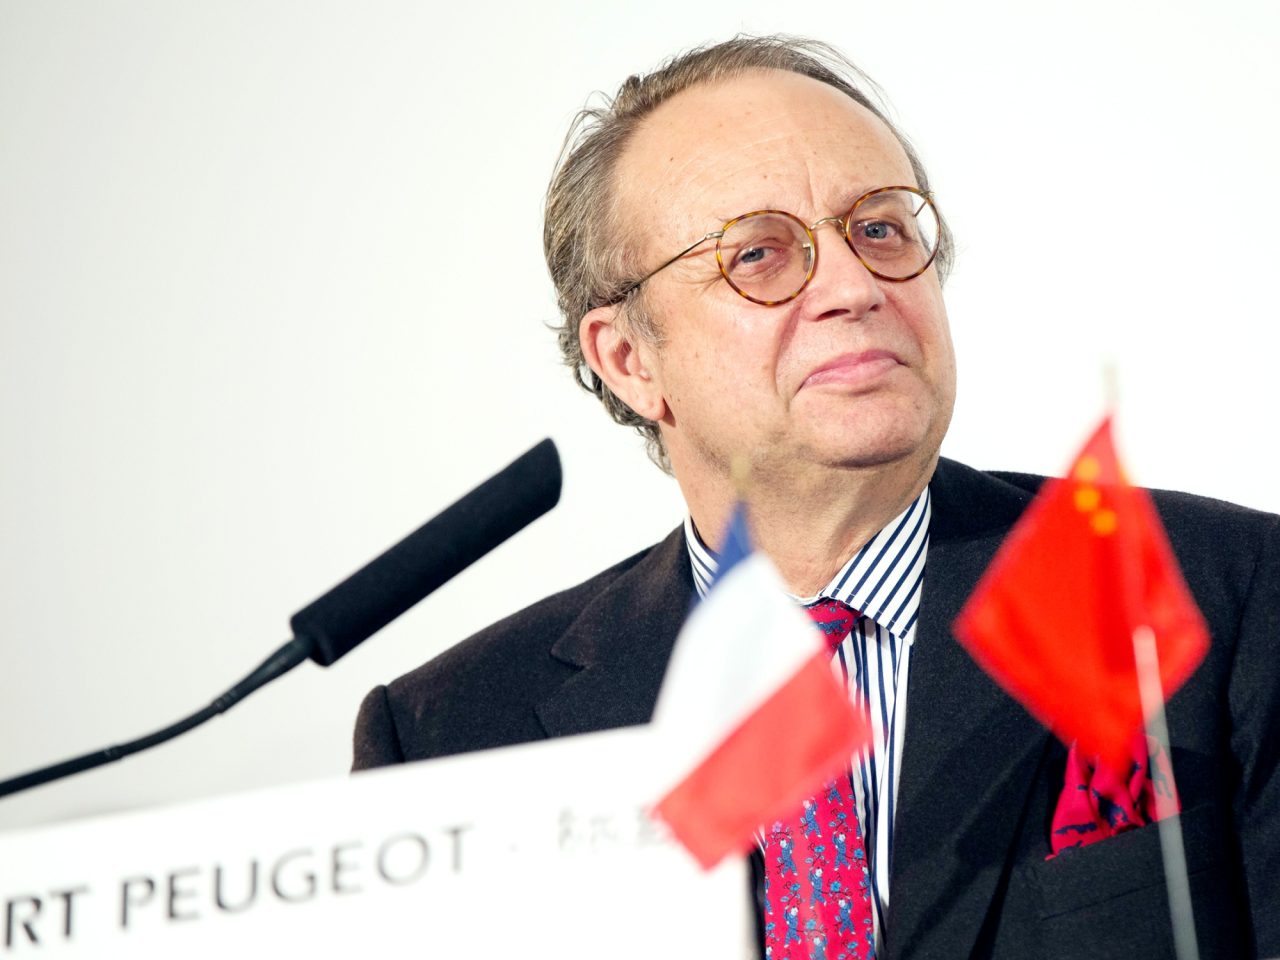 Robert Peugeot